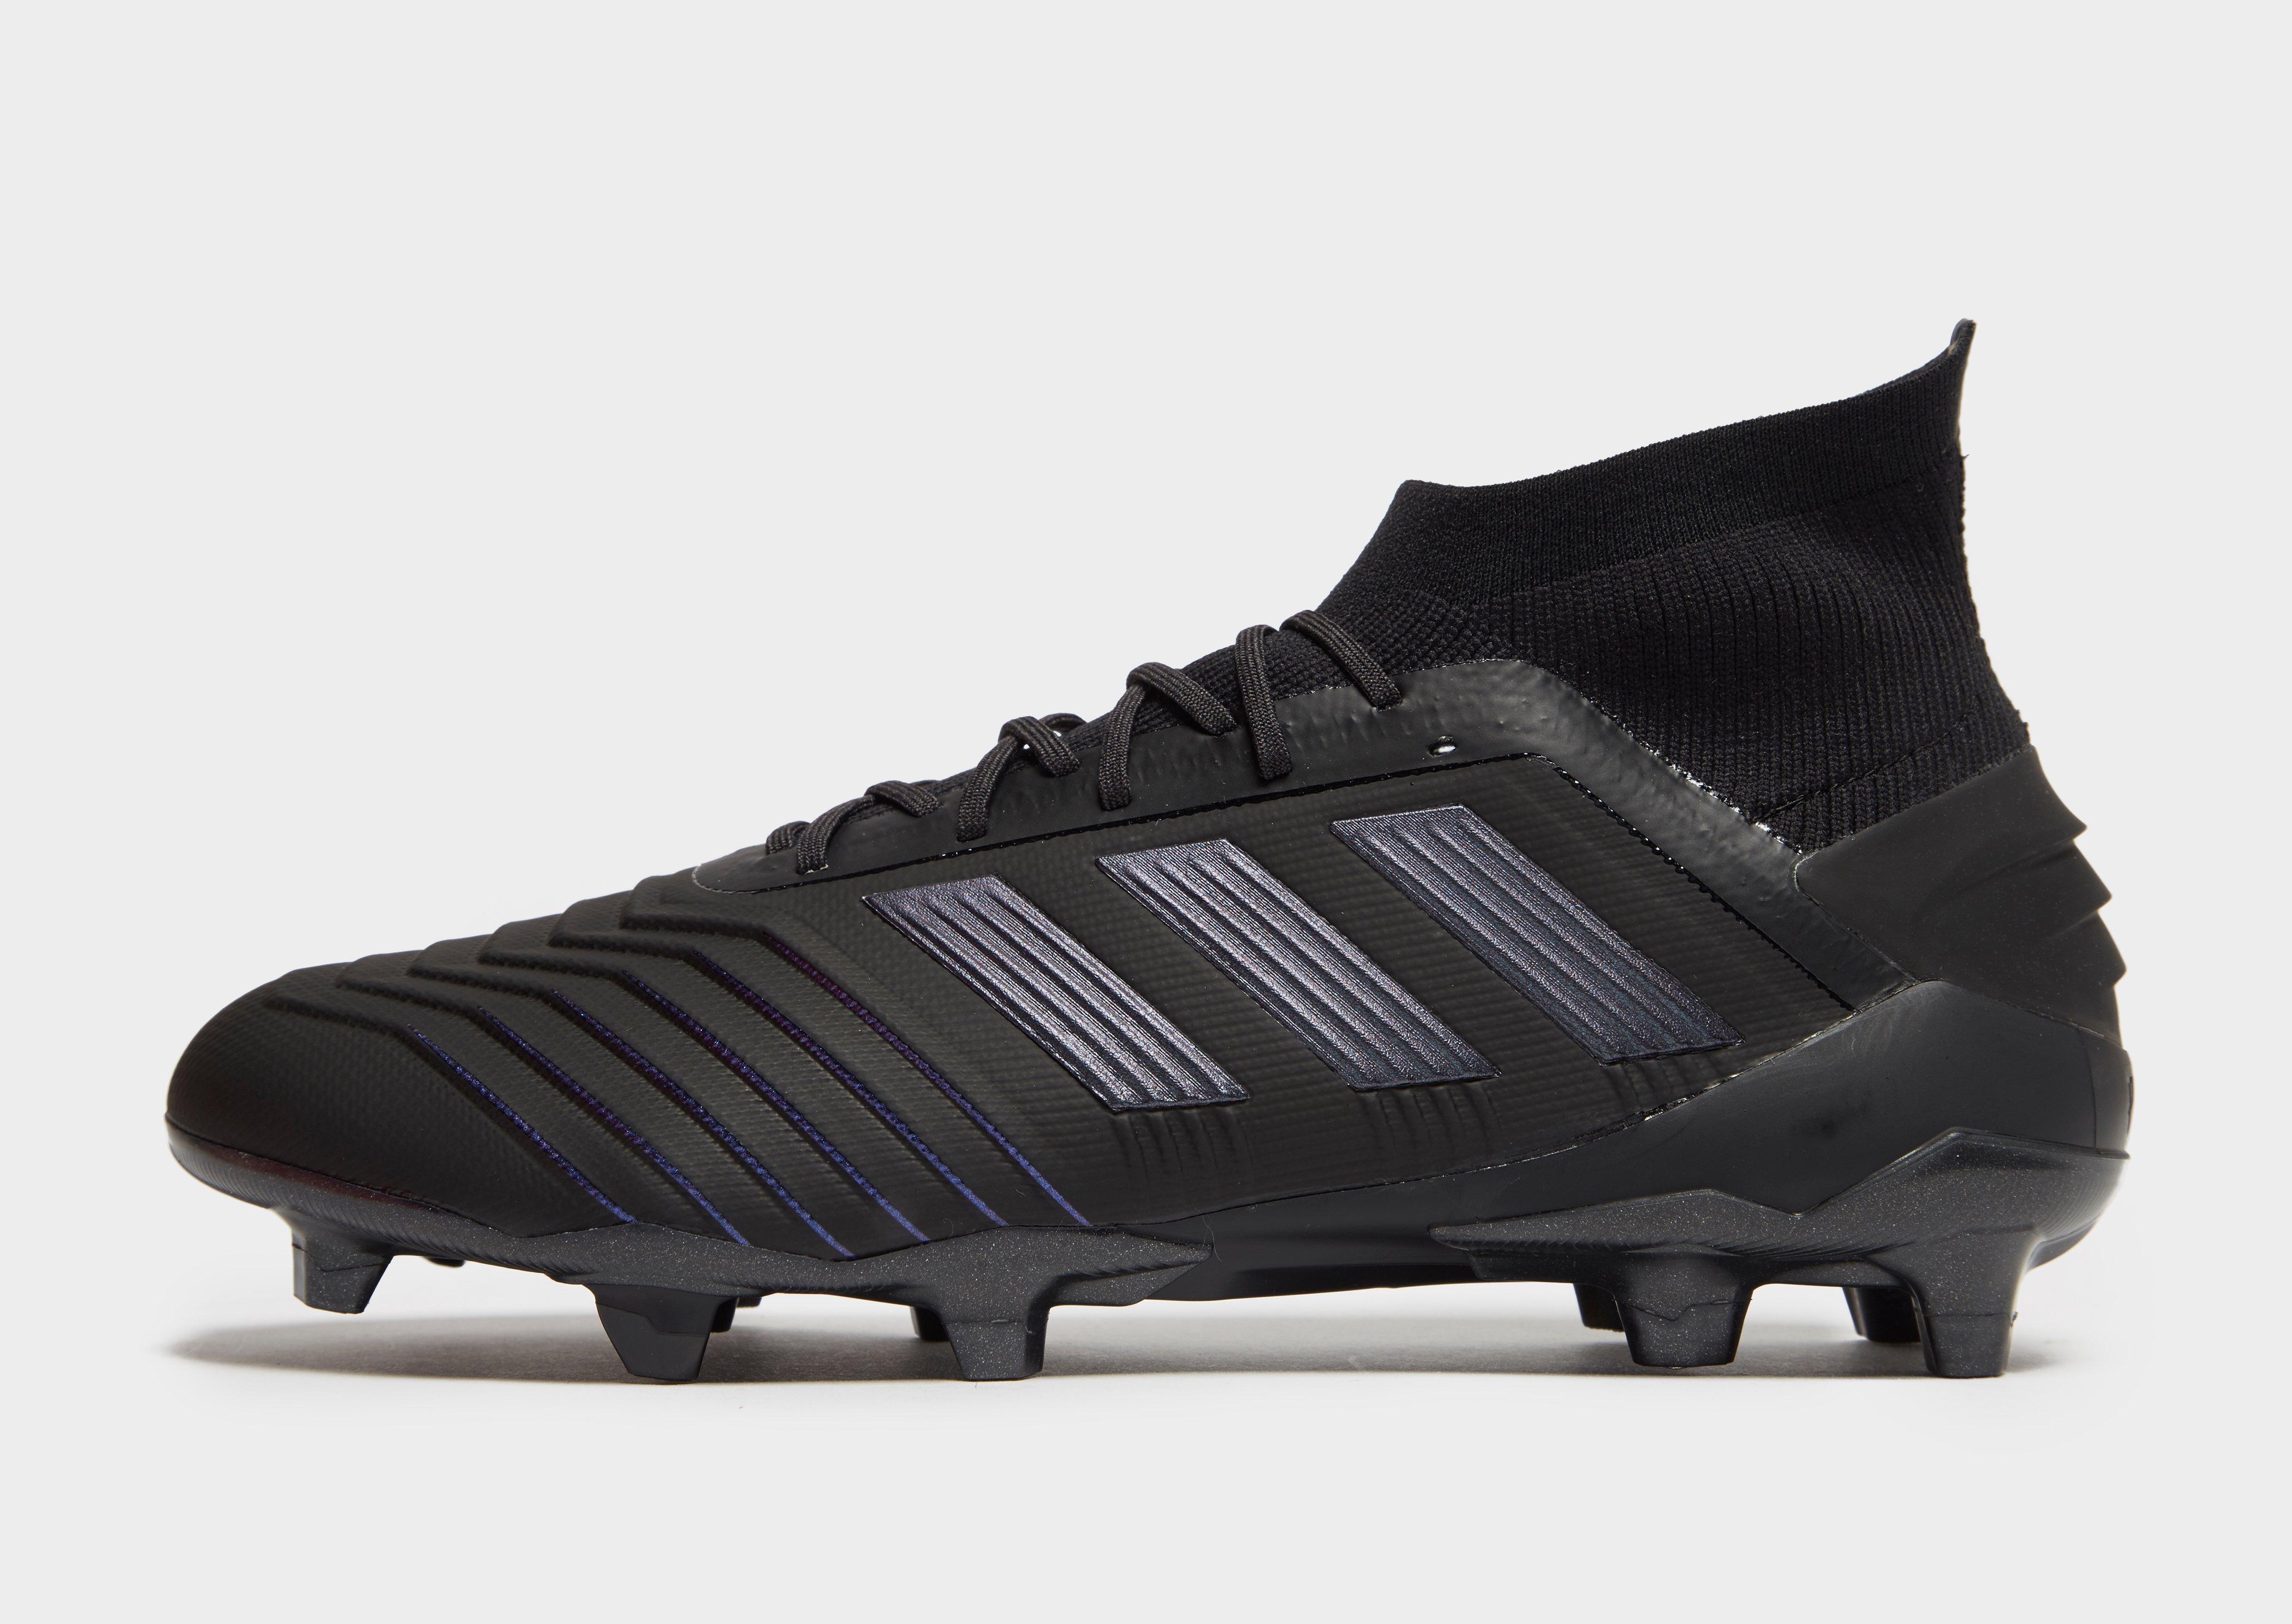 adidas personalised football boots